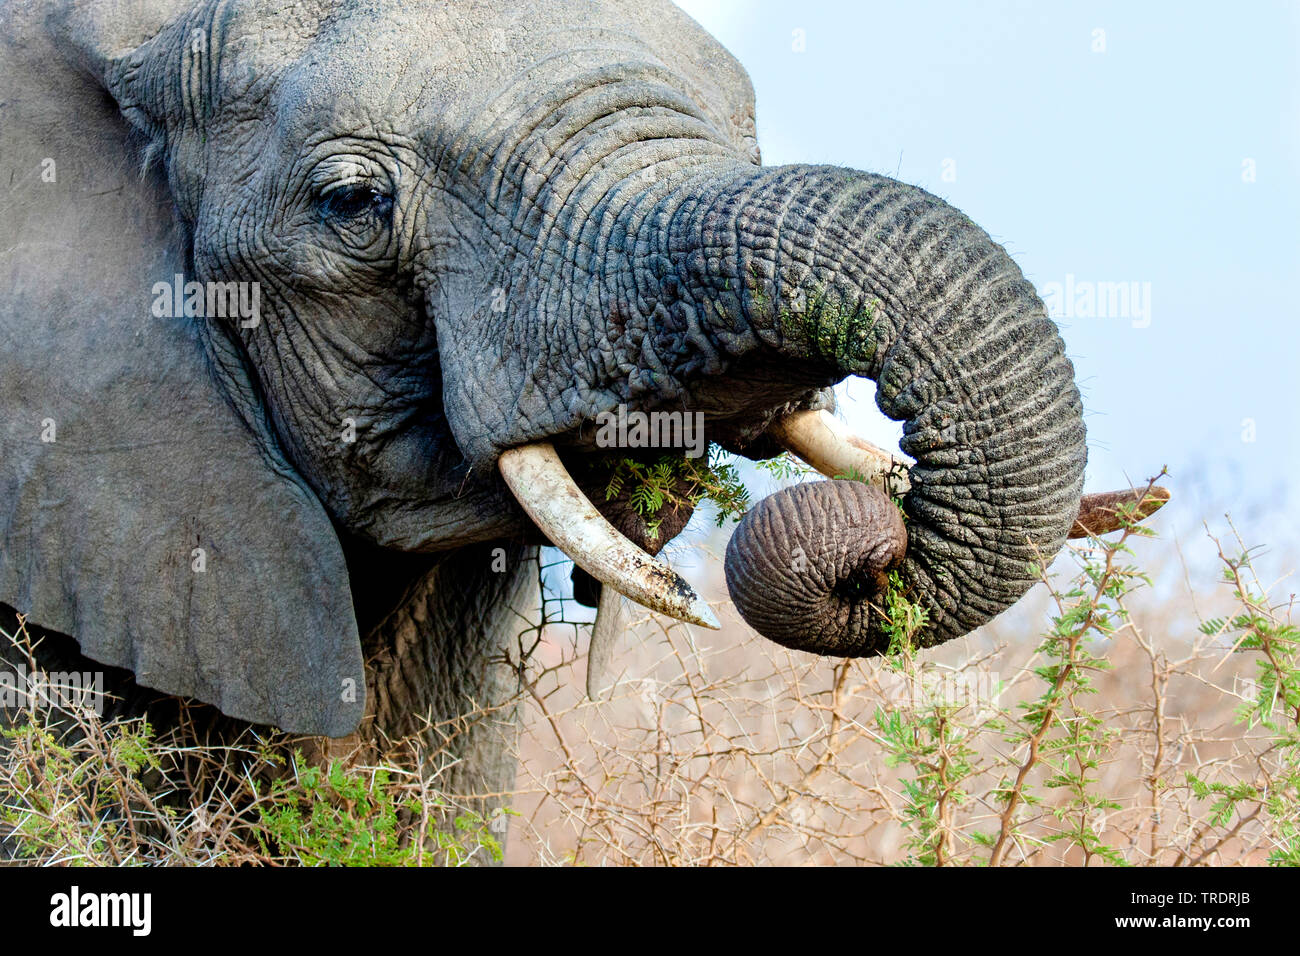 African elephant (Loxodonta africana), feeding from a thornbush, portrait, South Africa, Mpumalanga, Kruger National Park Stock Photo